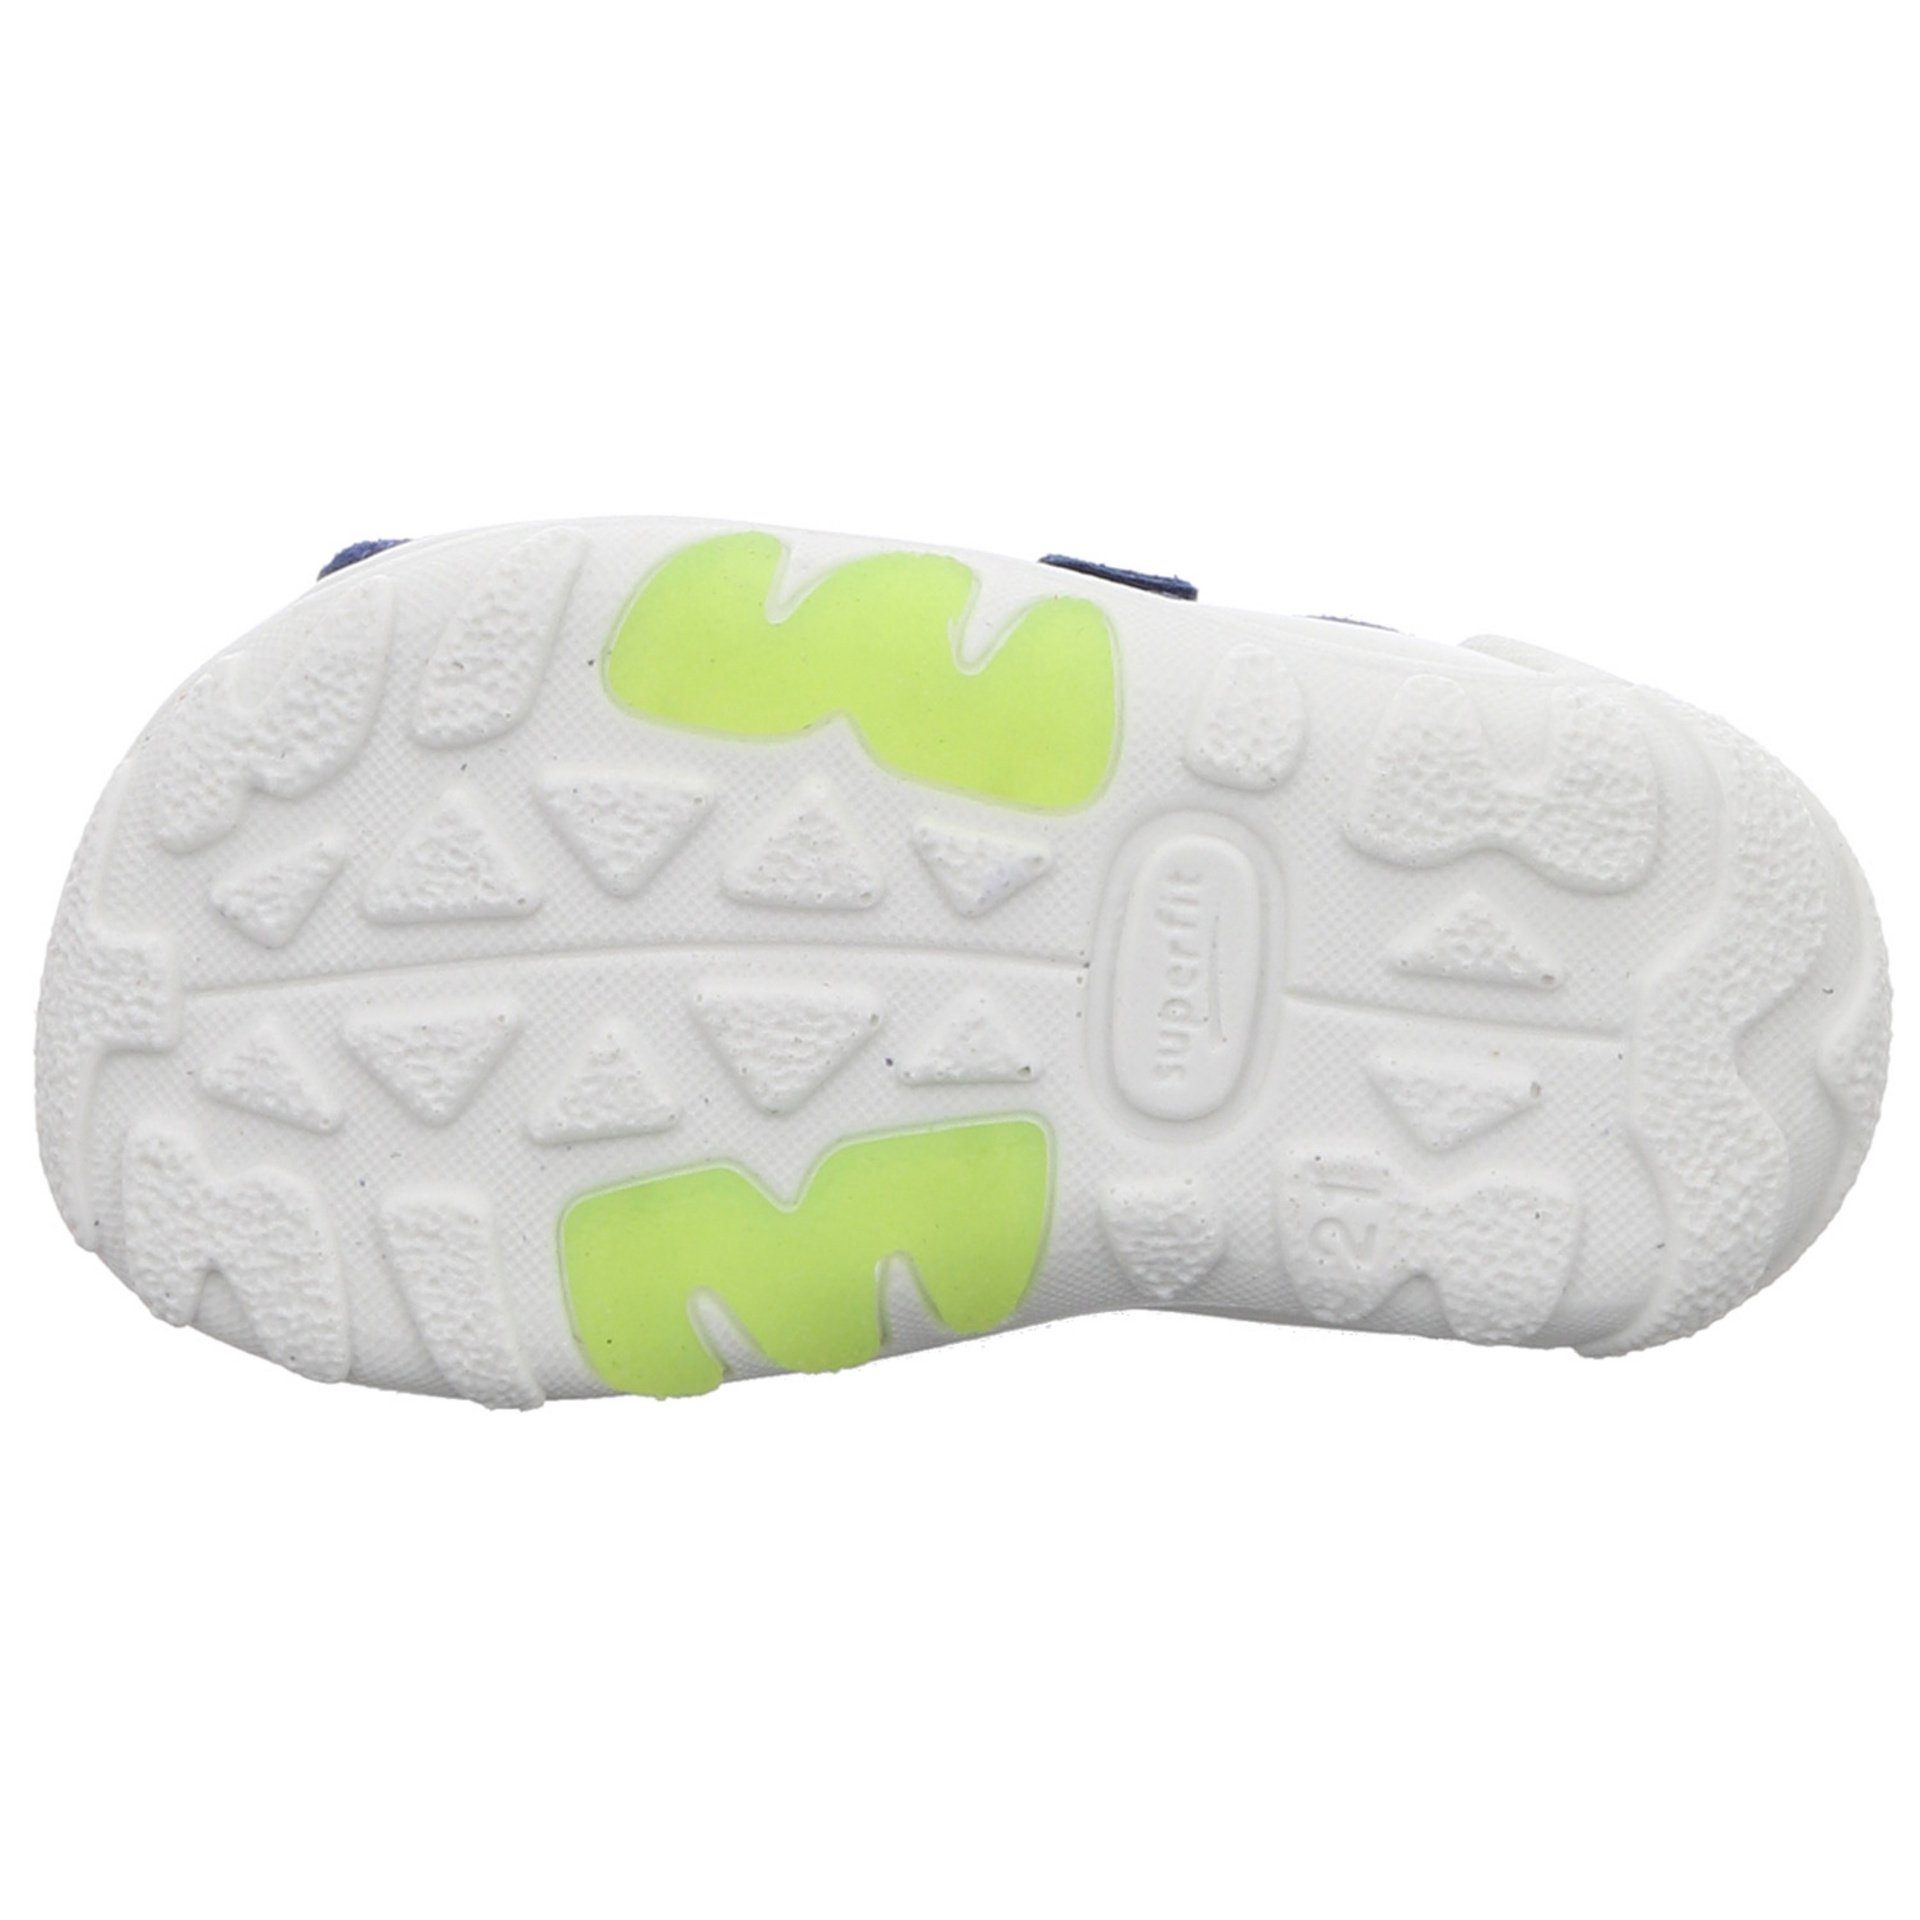 Schuhe Sandale Sandalen Flow Superfit Sandale Leder-/Textilkombination Kinderschuhe BLAU/HELLGRÜN Jungen